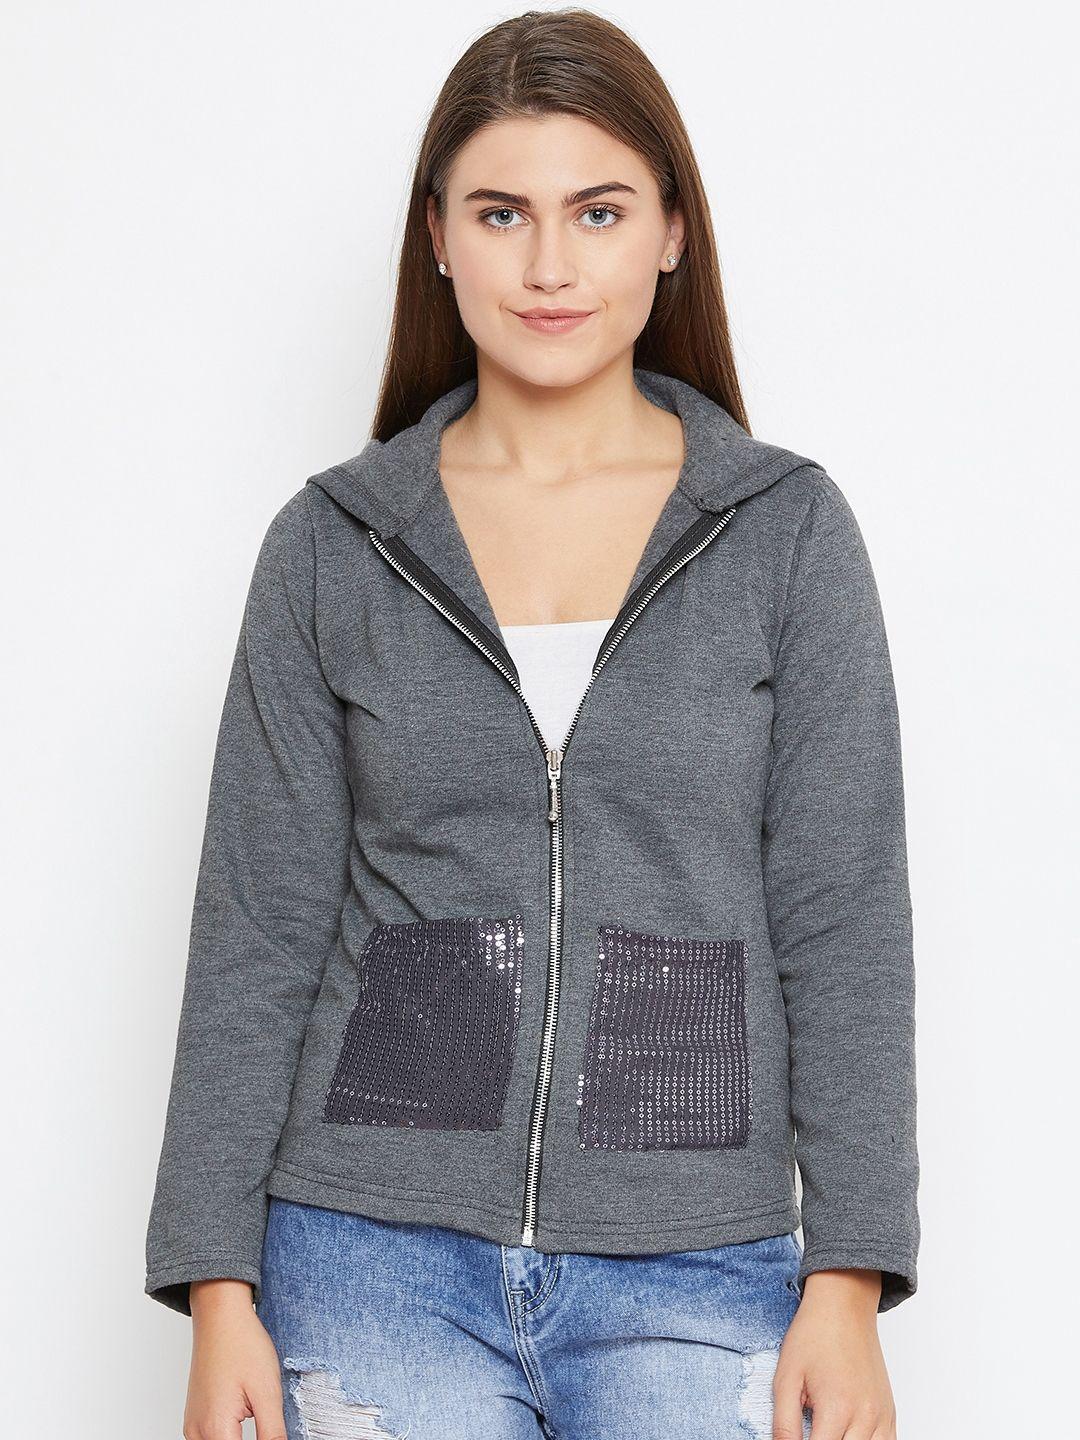 belle-fille-women-charcoal-grey-solid-hooded-jacket